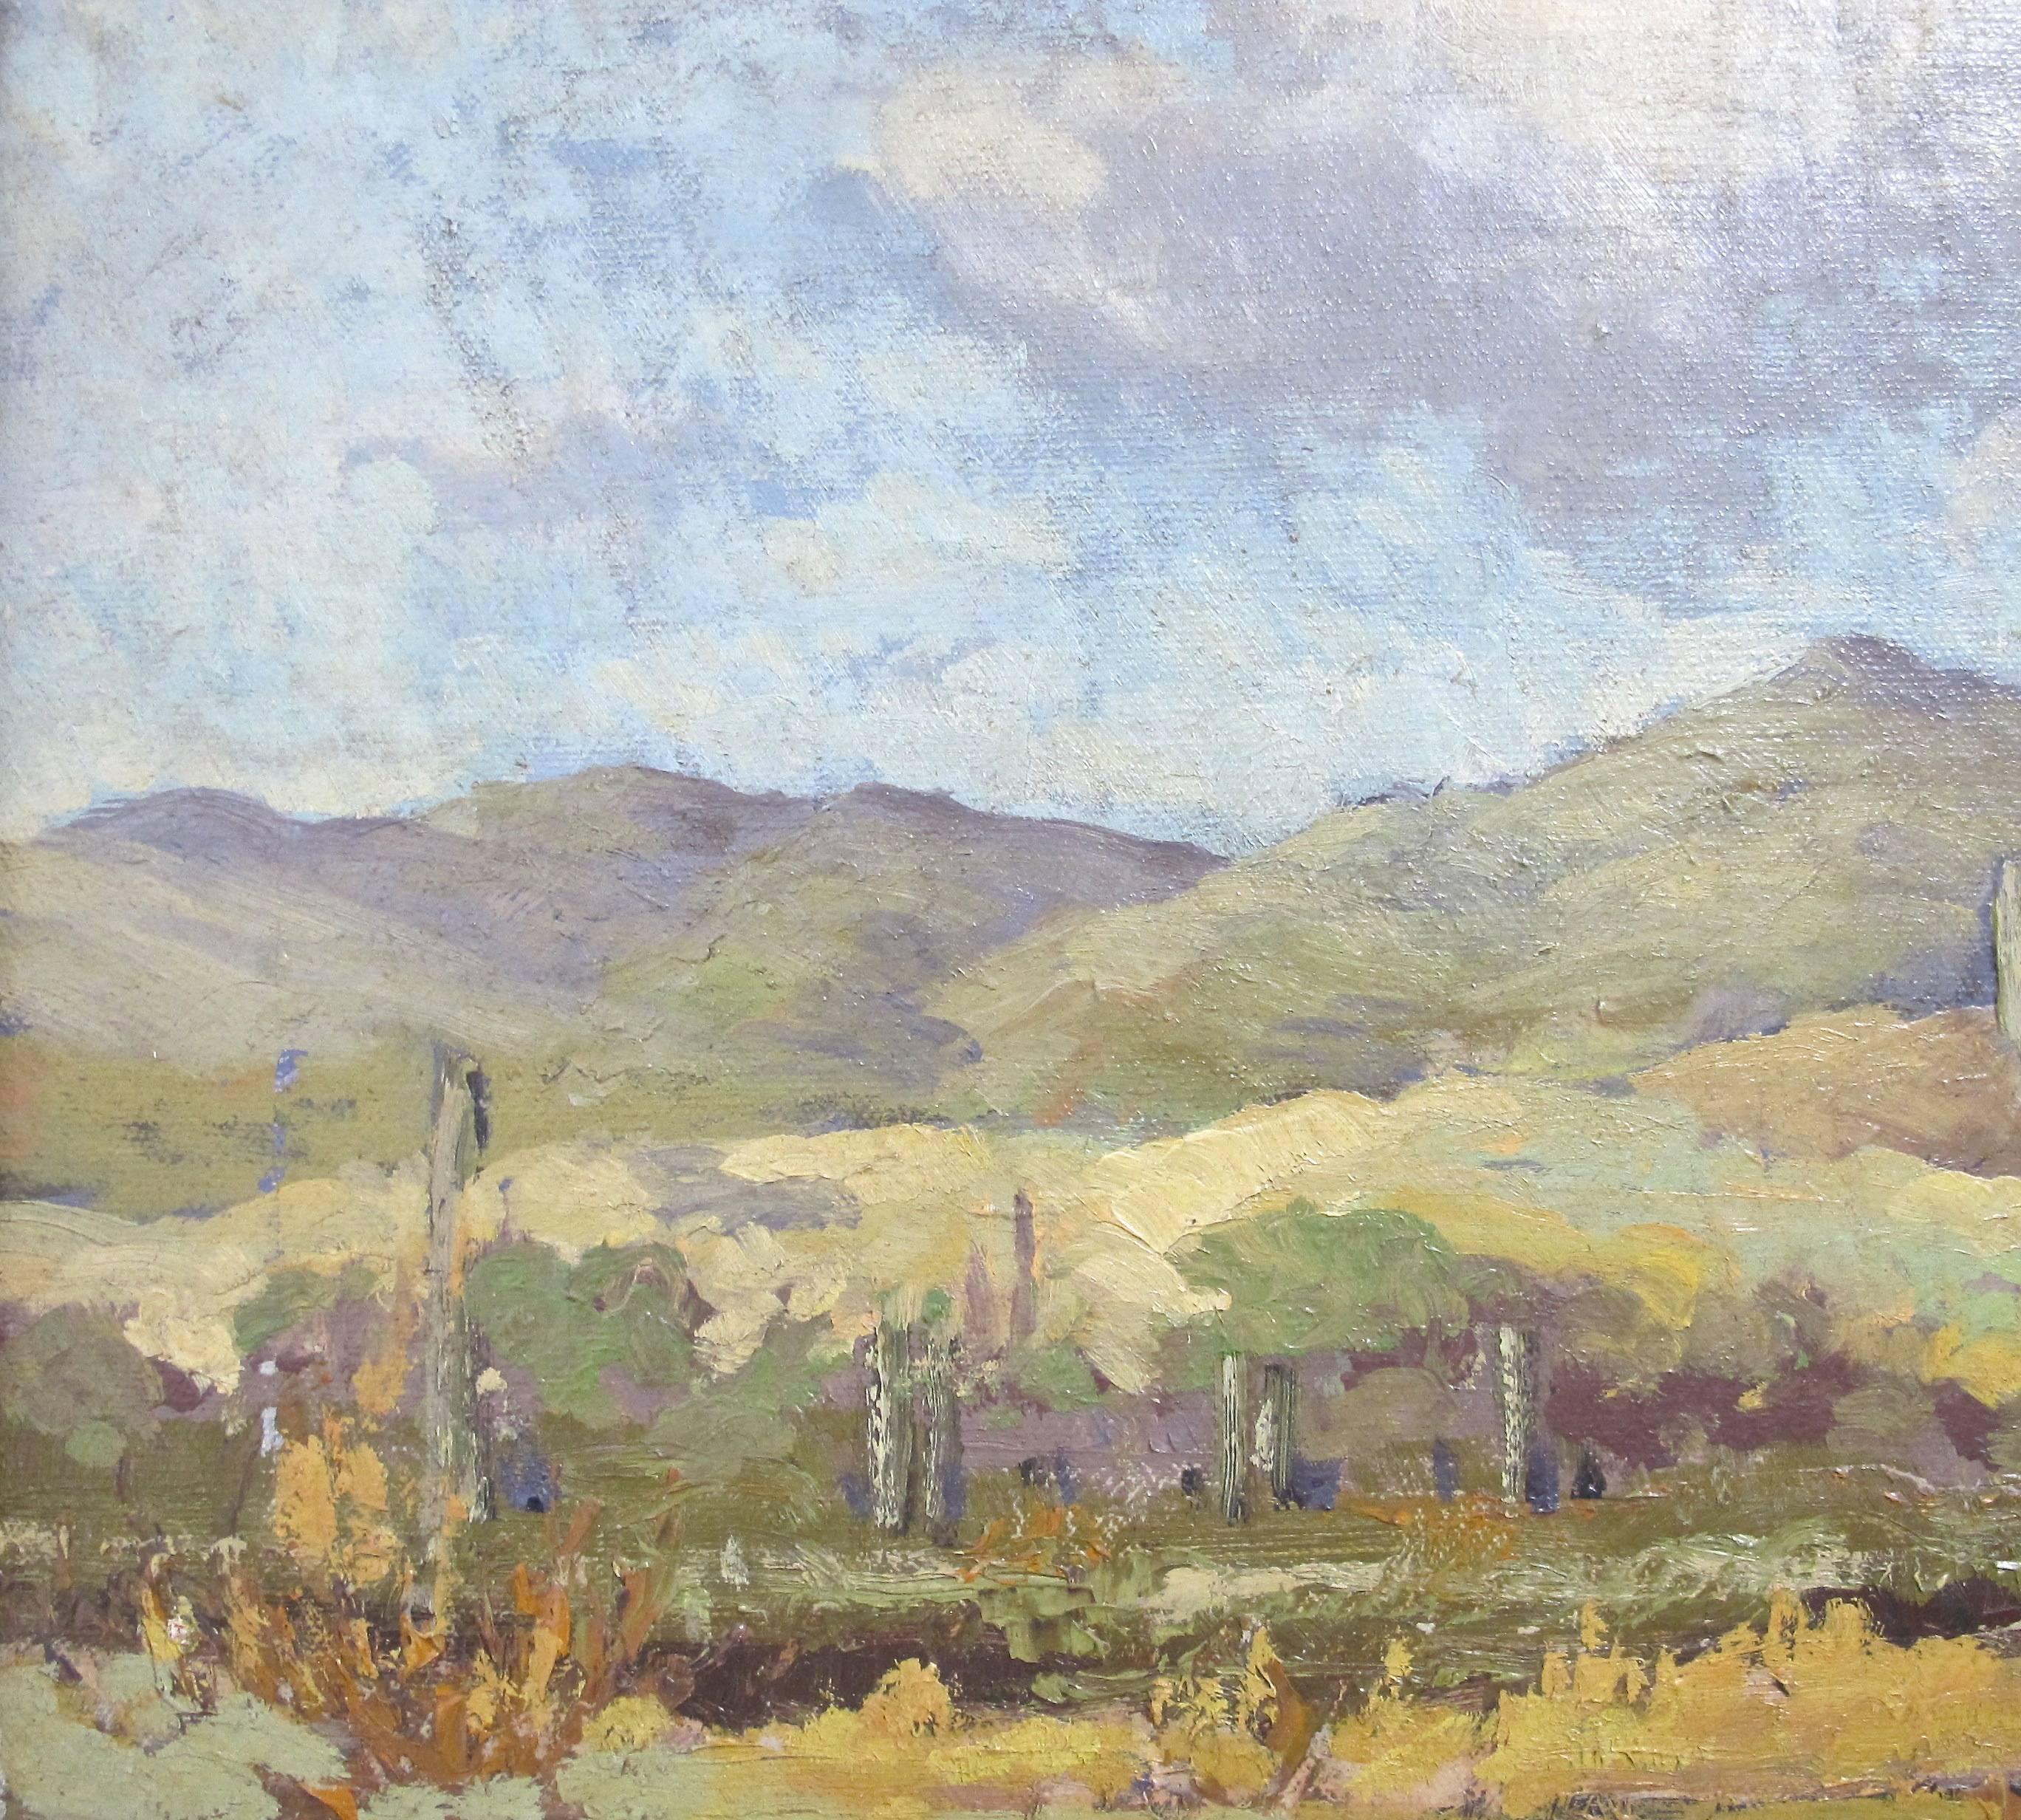 South West Desert Landscape Painting by Frank Sanford 2